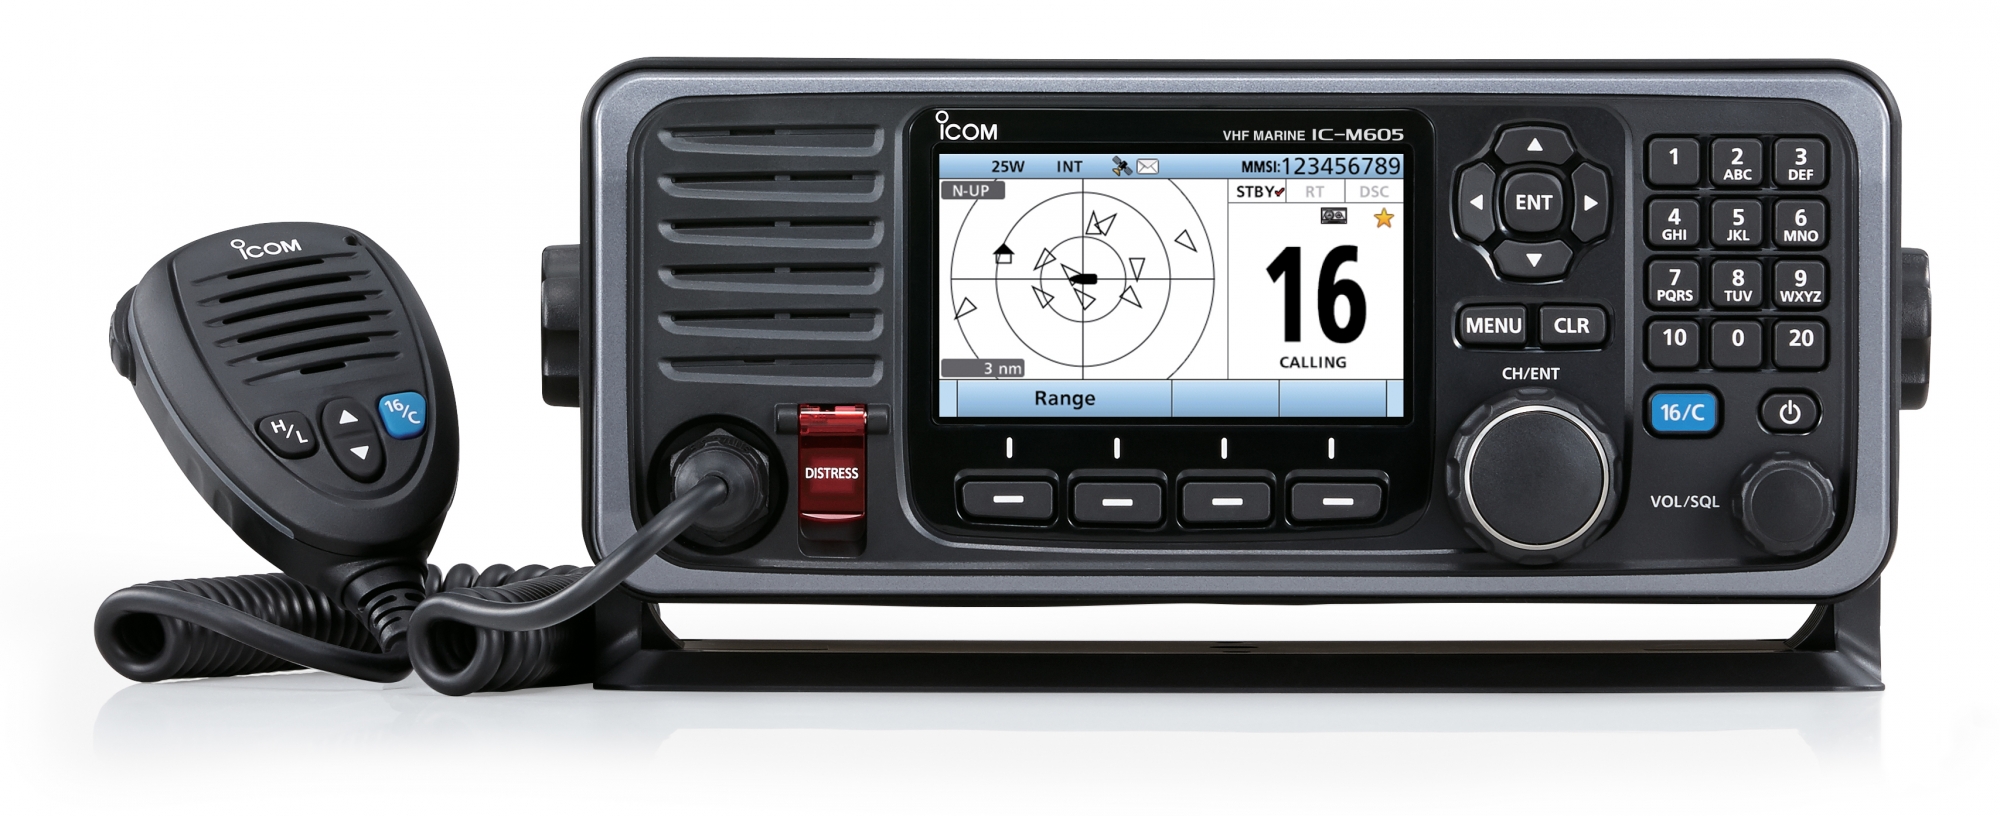 vhf-ais-icm605euro Marine VHF video tutorials ICOM